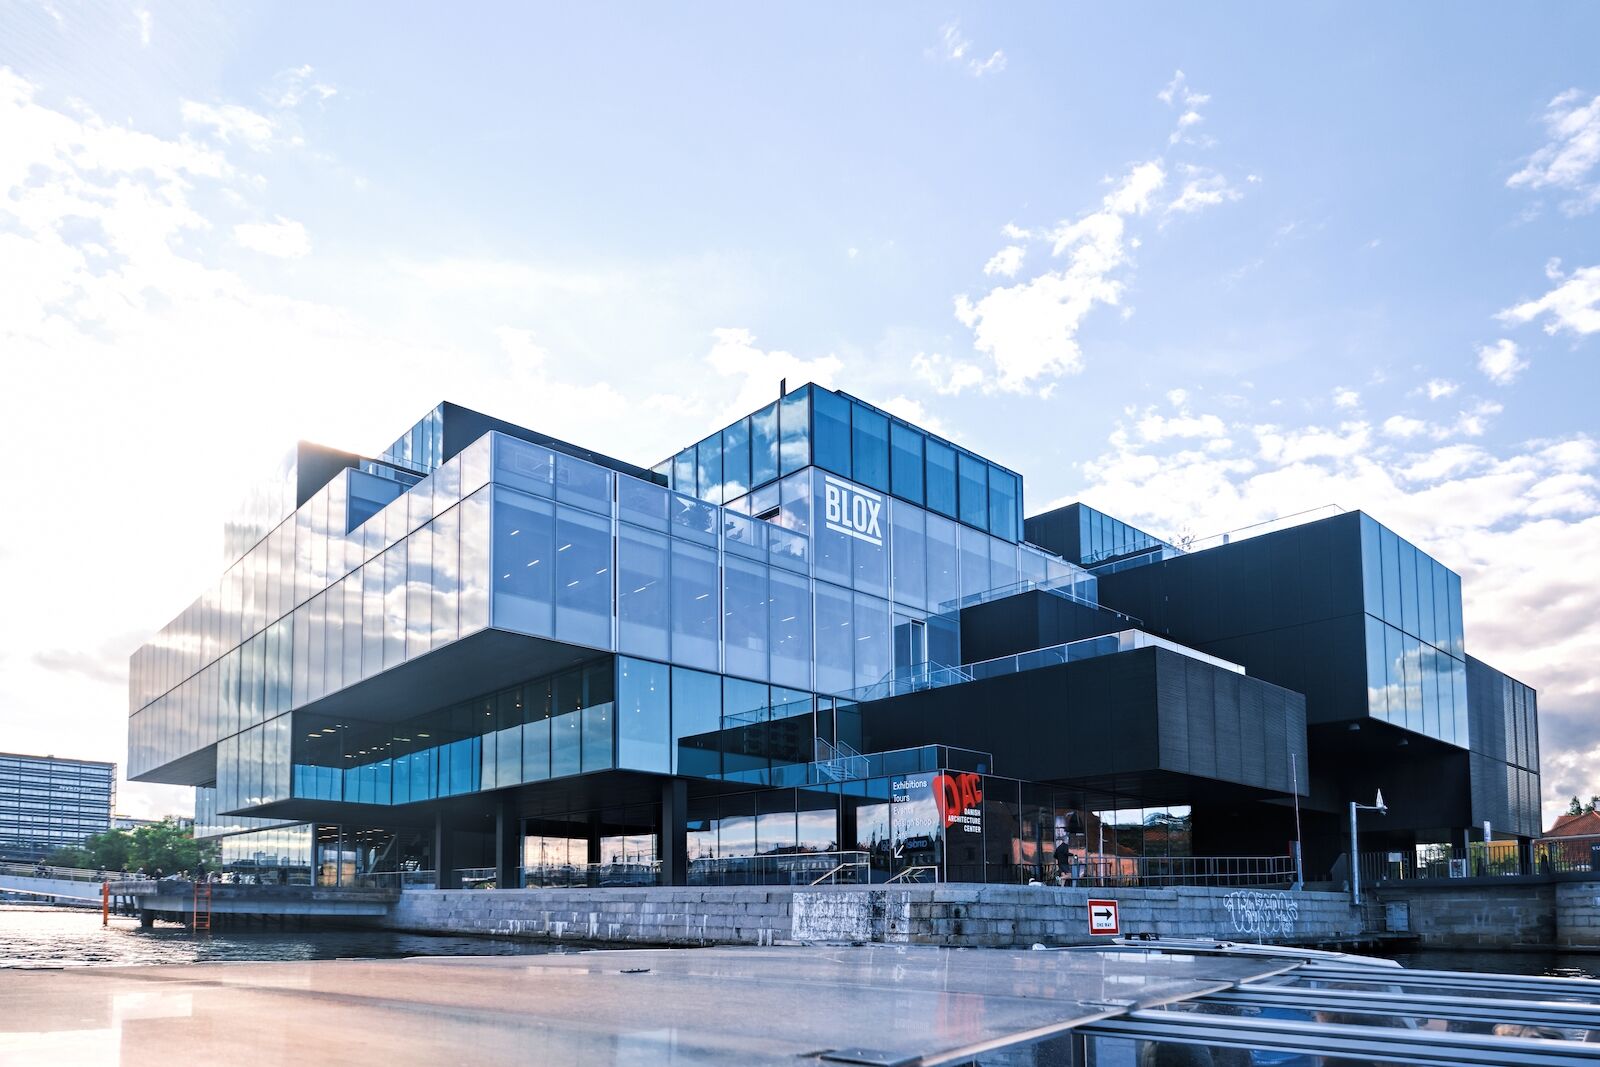 Copenhagen, Denmark - Sept 2022: The BLOX, a new prestige building for architecture and design on Christians Brygge. House of Danish Architecture Center (Dansk Arkitektur Center, DAC)  designed by OMA